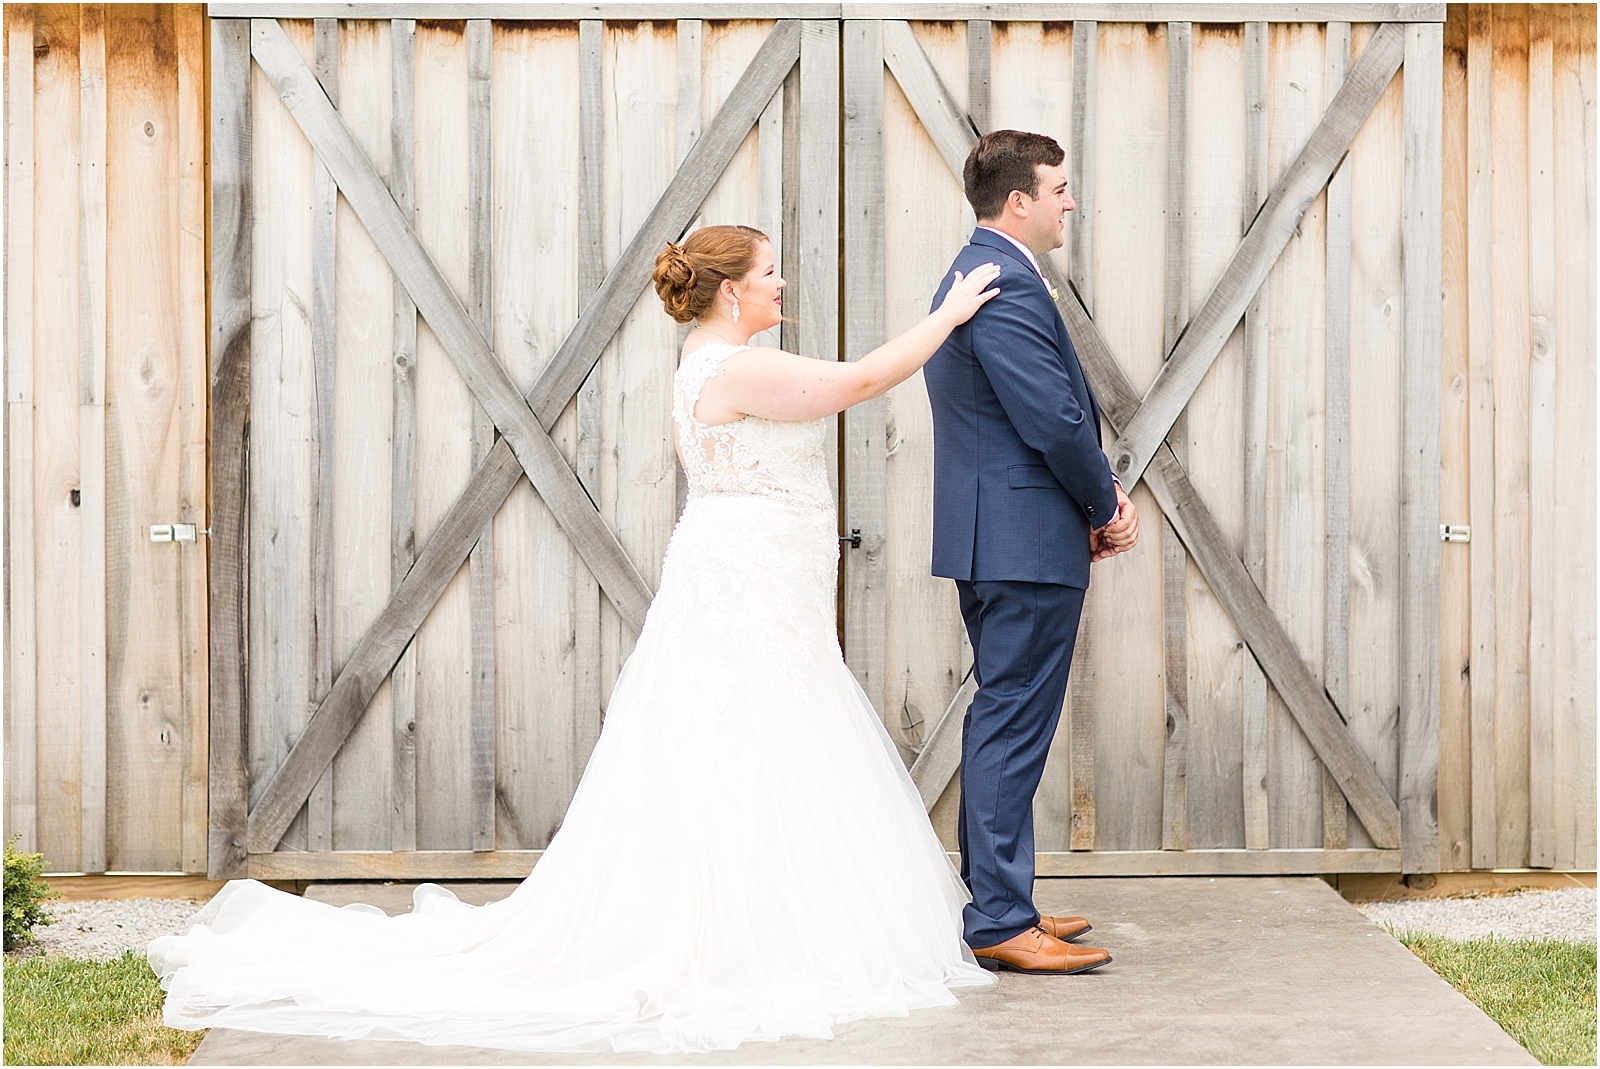 Rachel and Michael | Bret and Brandie Photography | Evansville Wedding Photographers 0026.jpg